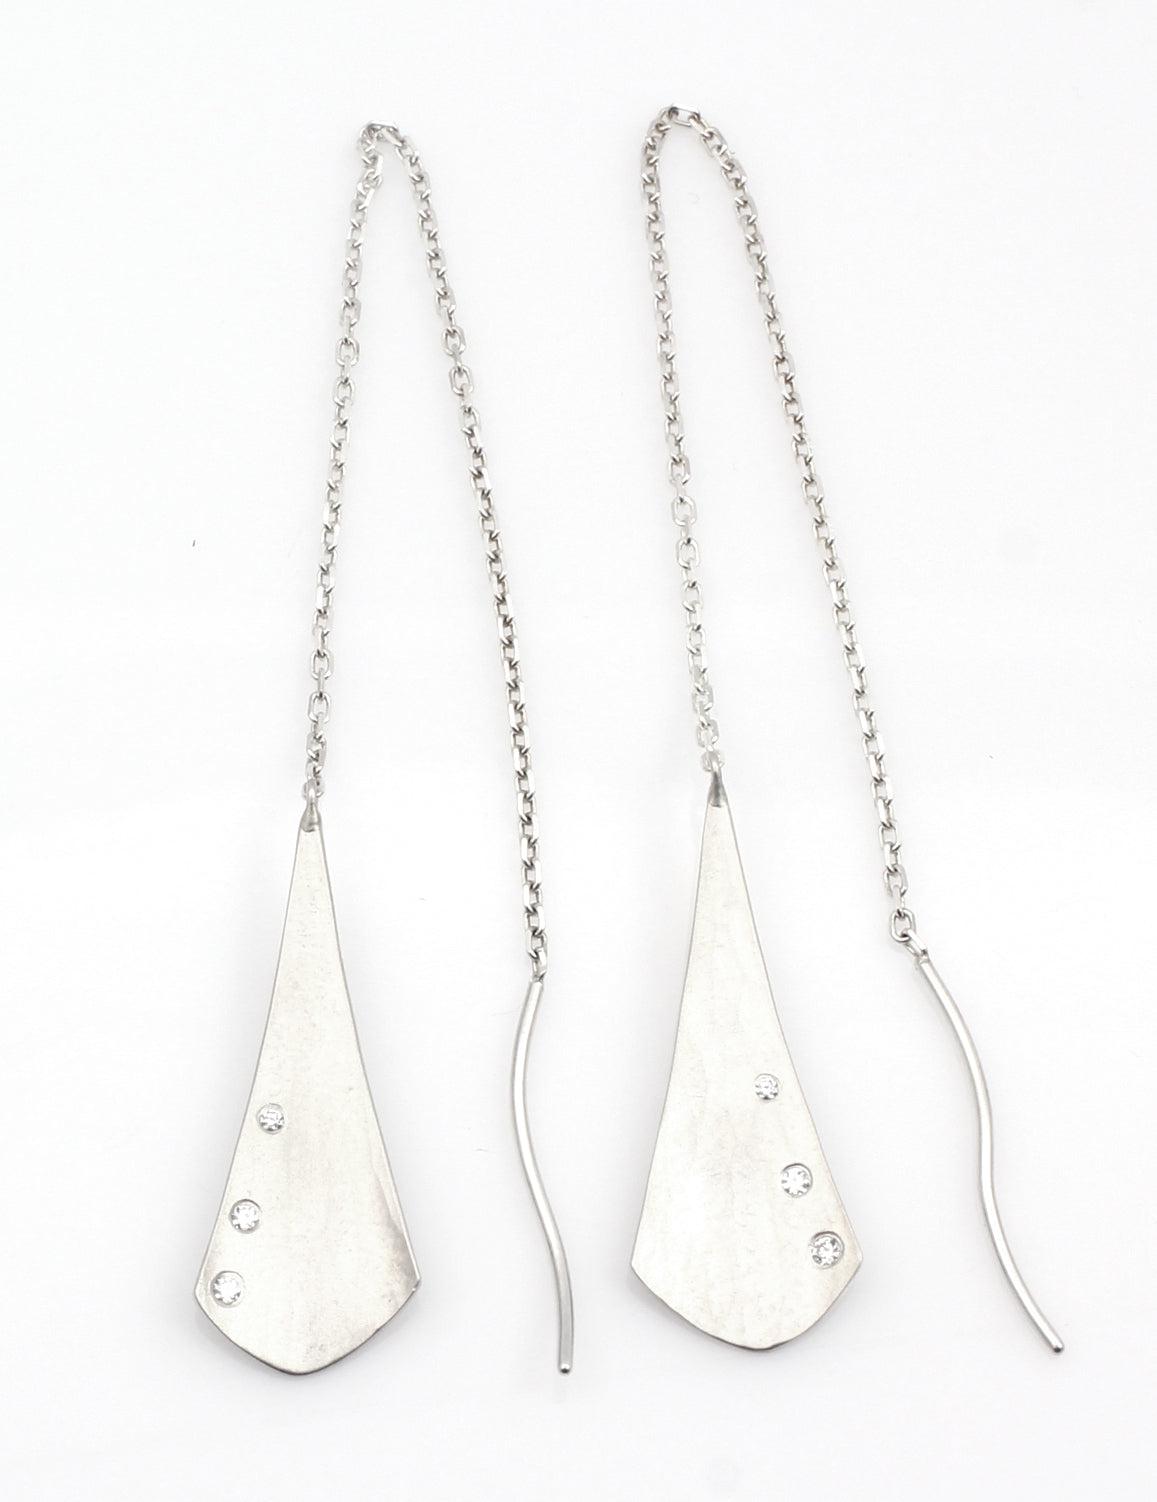 Articulated Mist Orchid Earrings-Jewelry-Toby Pomeroy-Sorrel Sky Gallery